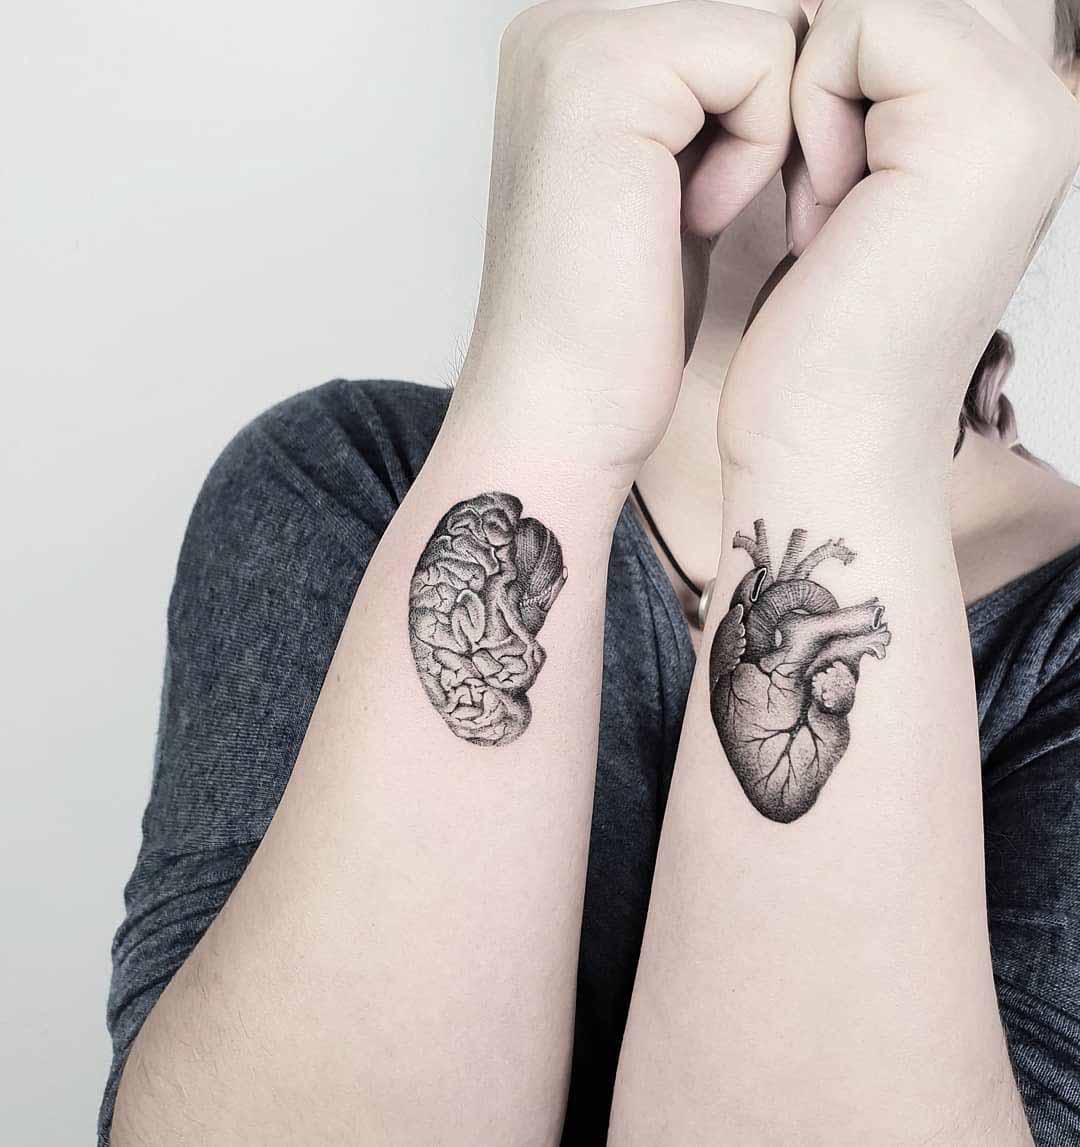 wrist tattoos brain and heart